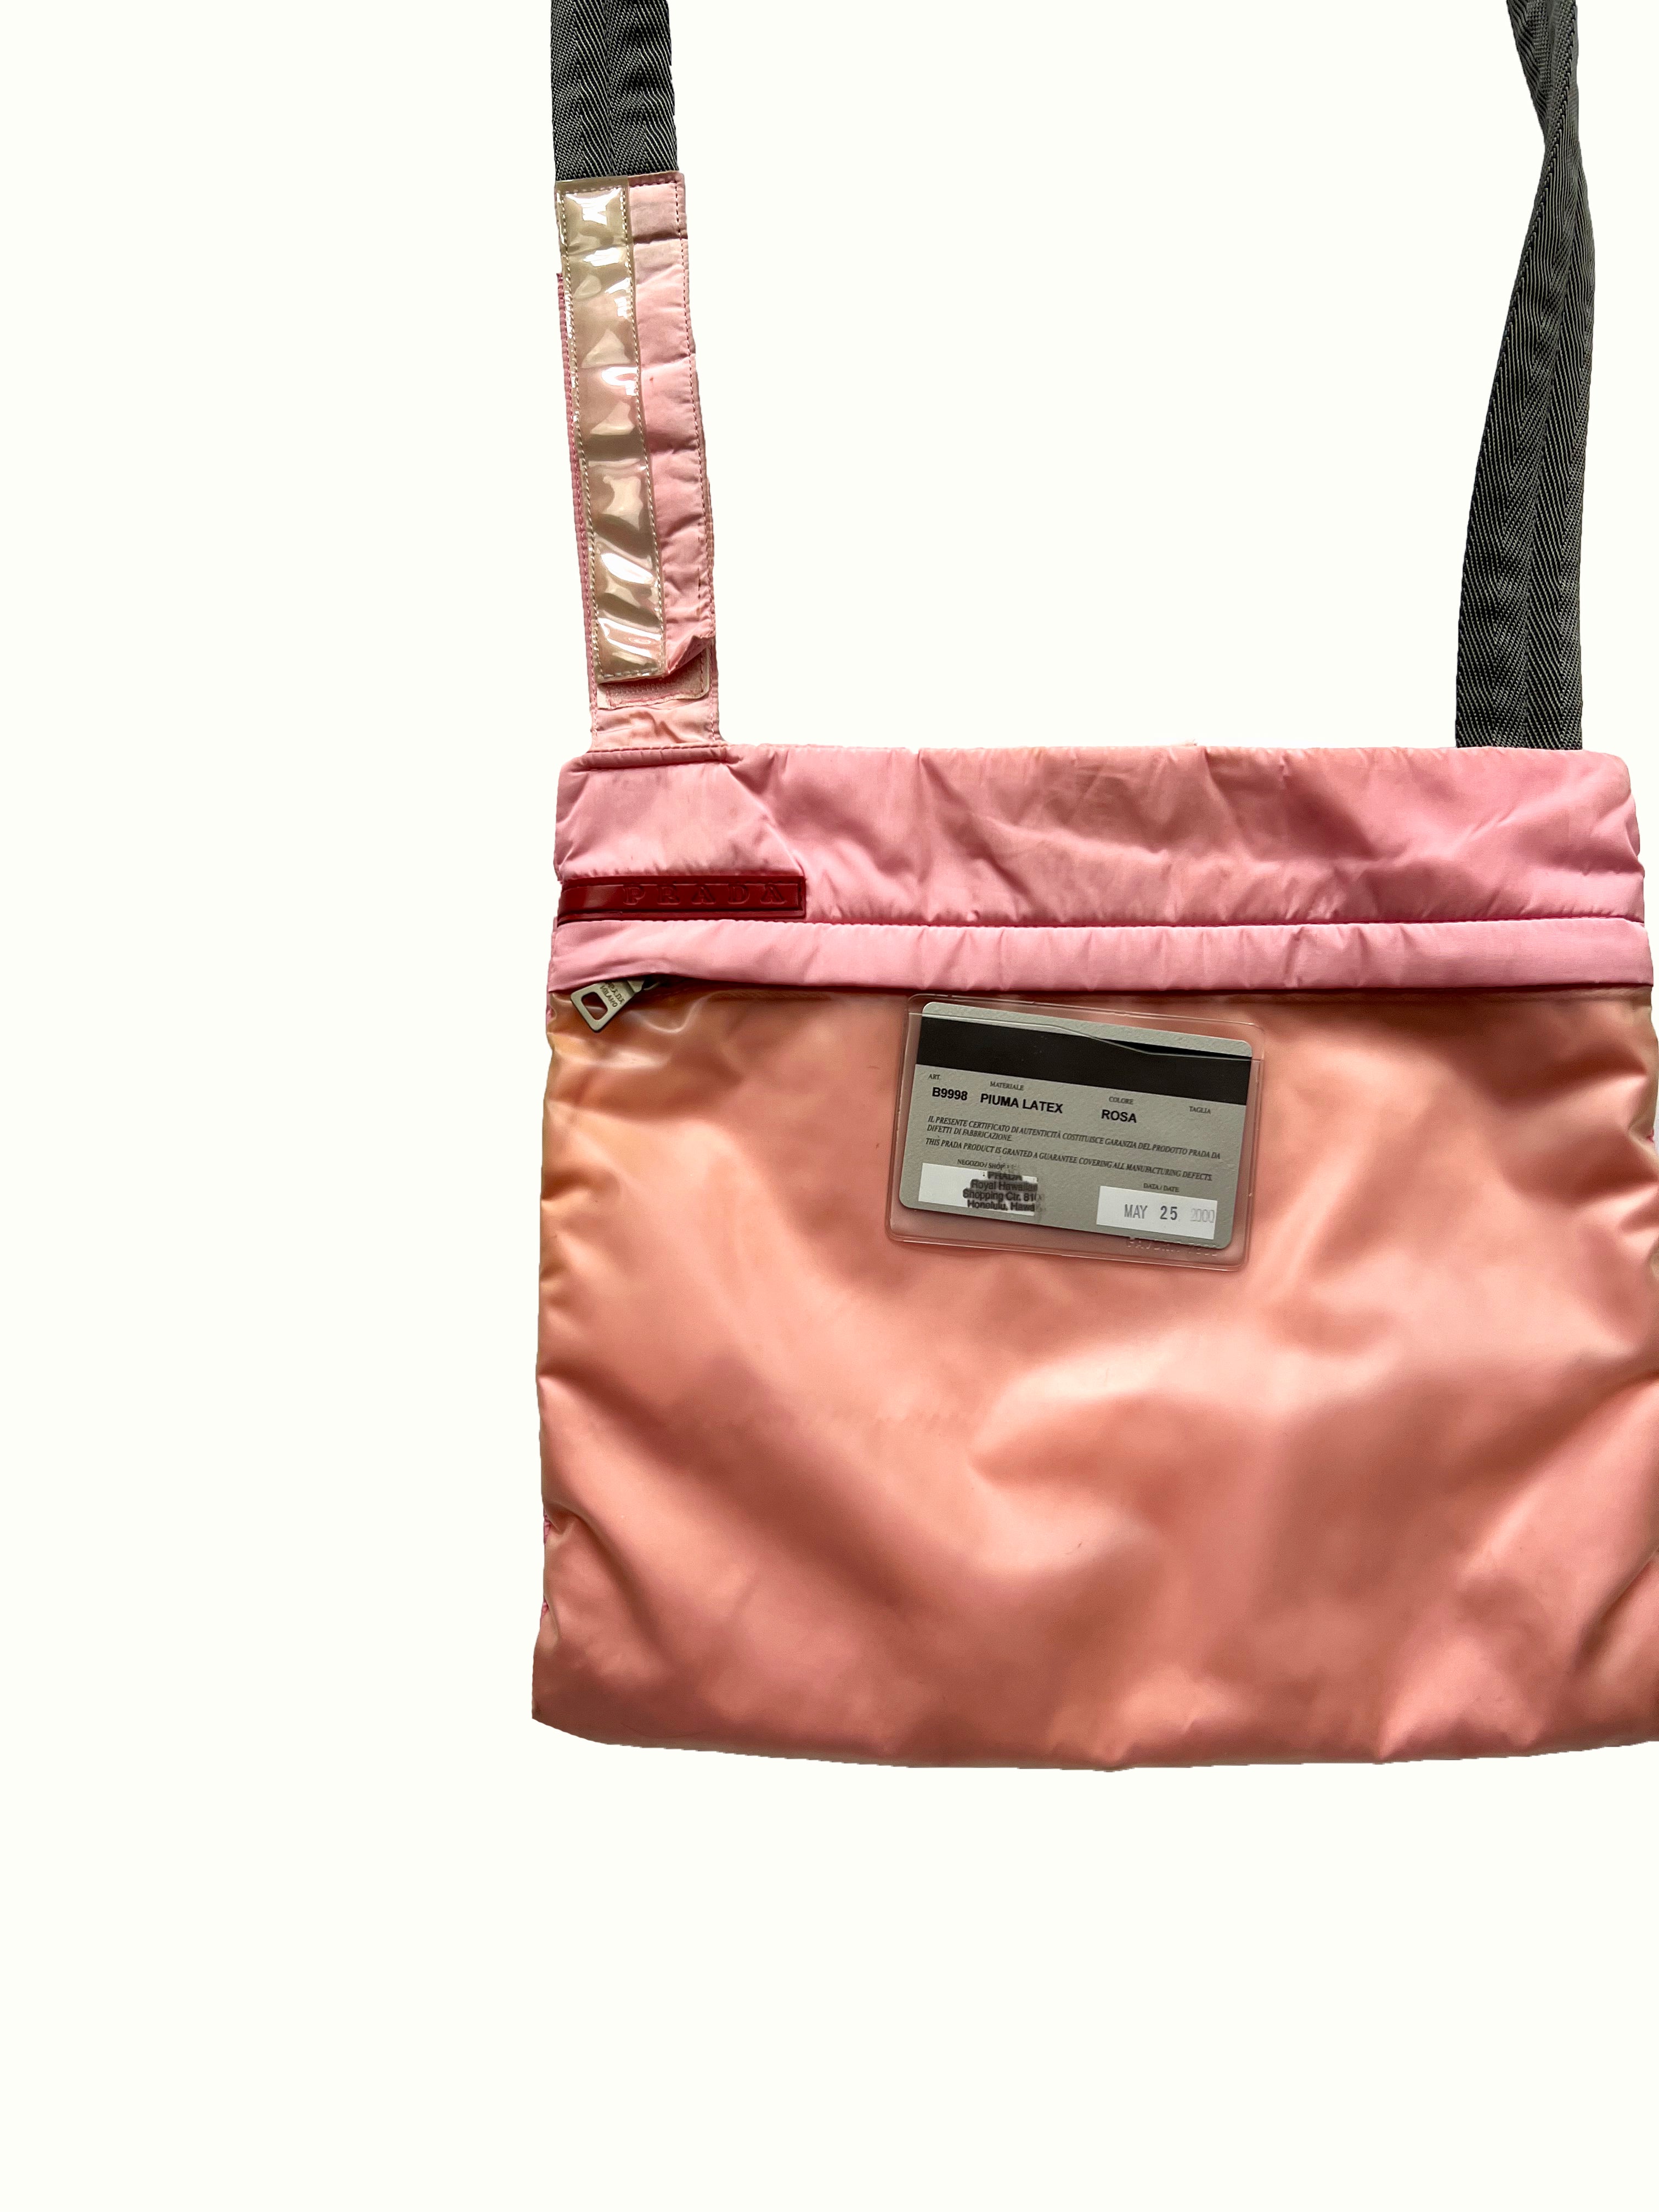 Prada Sport Pink Side Bag Circa 2000